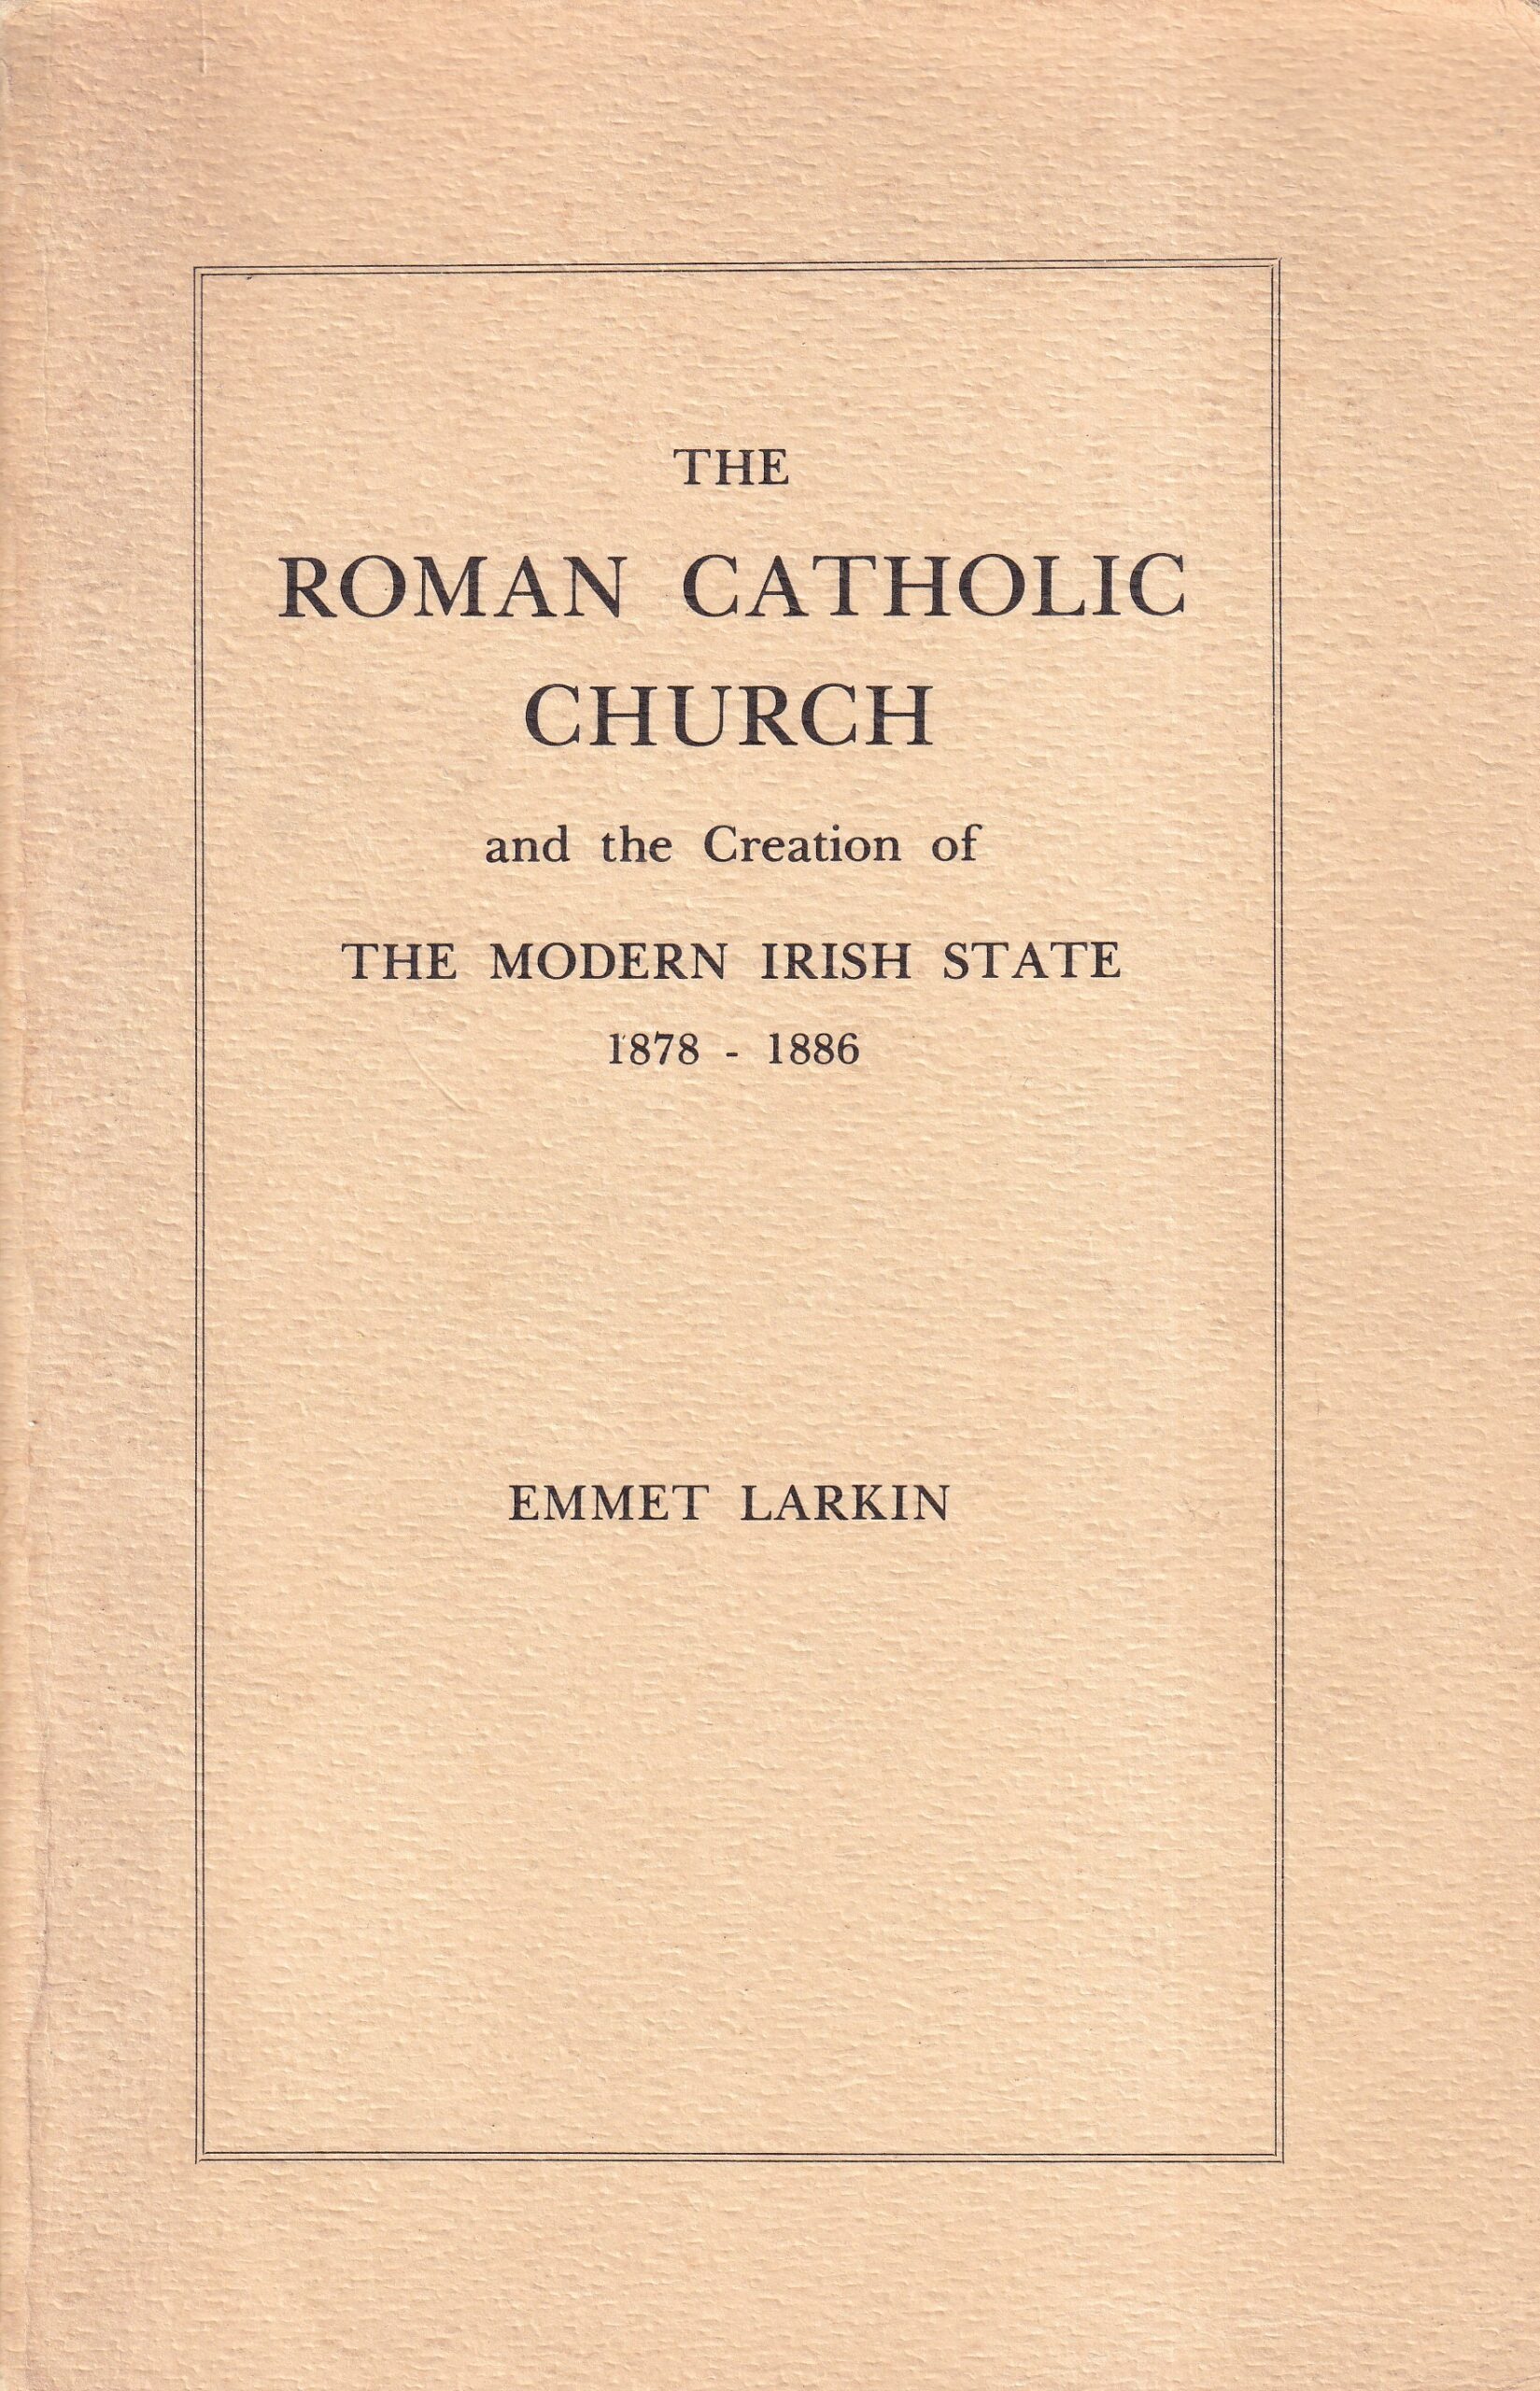 The Roman Catholic Church and the Creation of The Modern Irish State 1878-1886 by Emmet Larkin